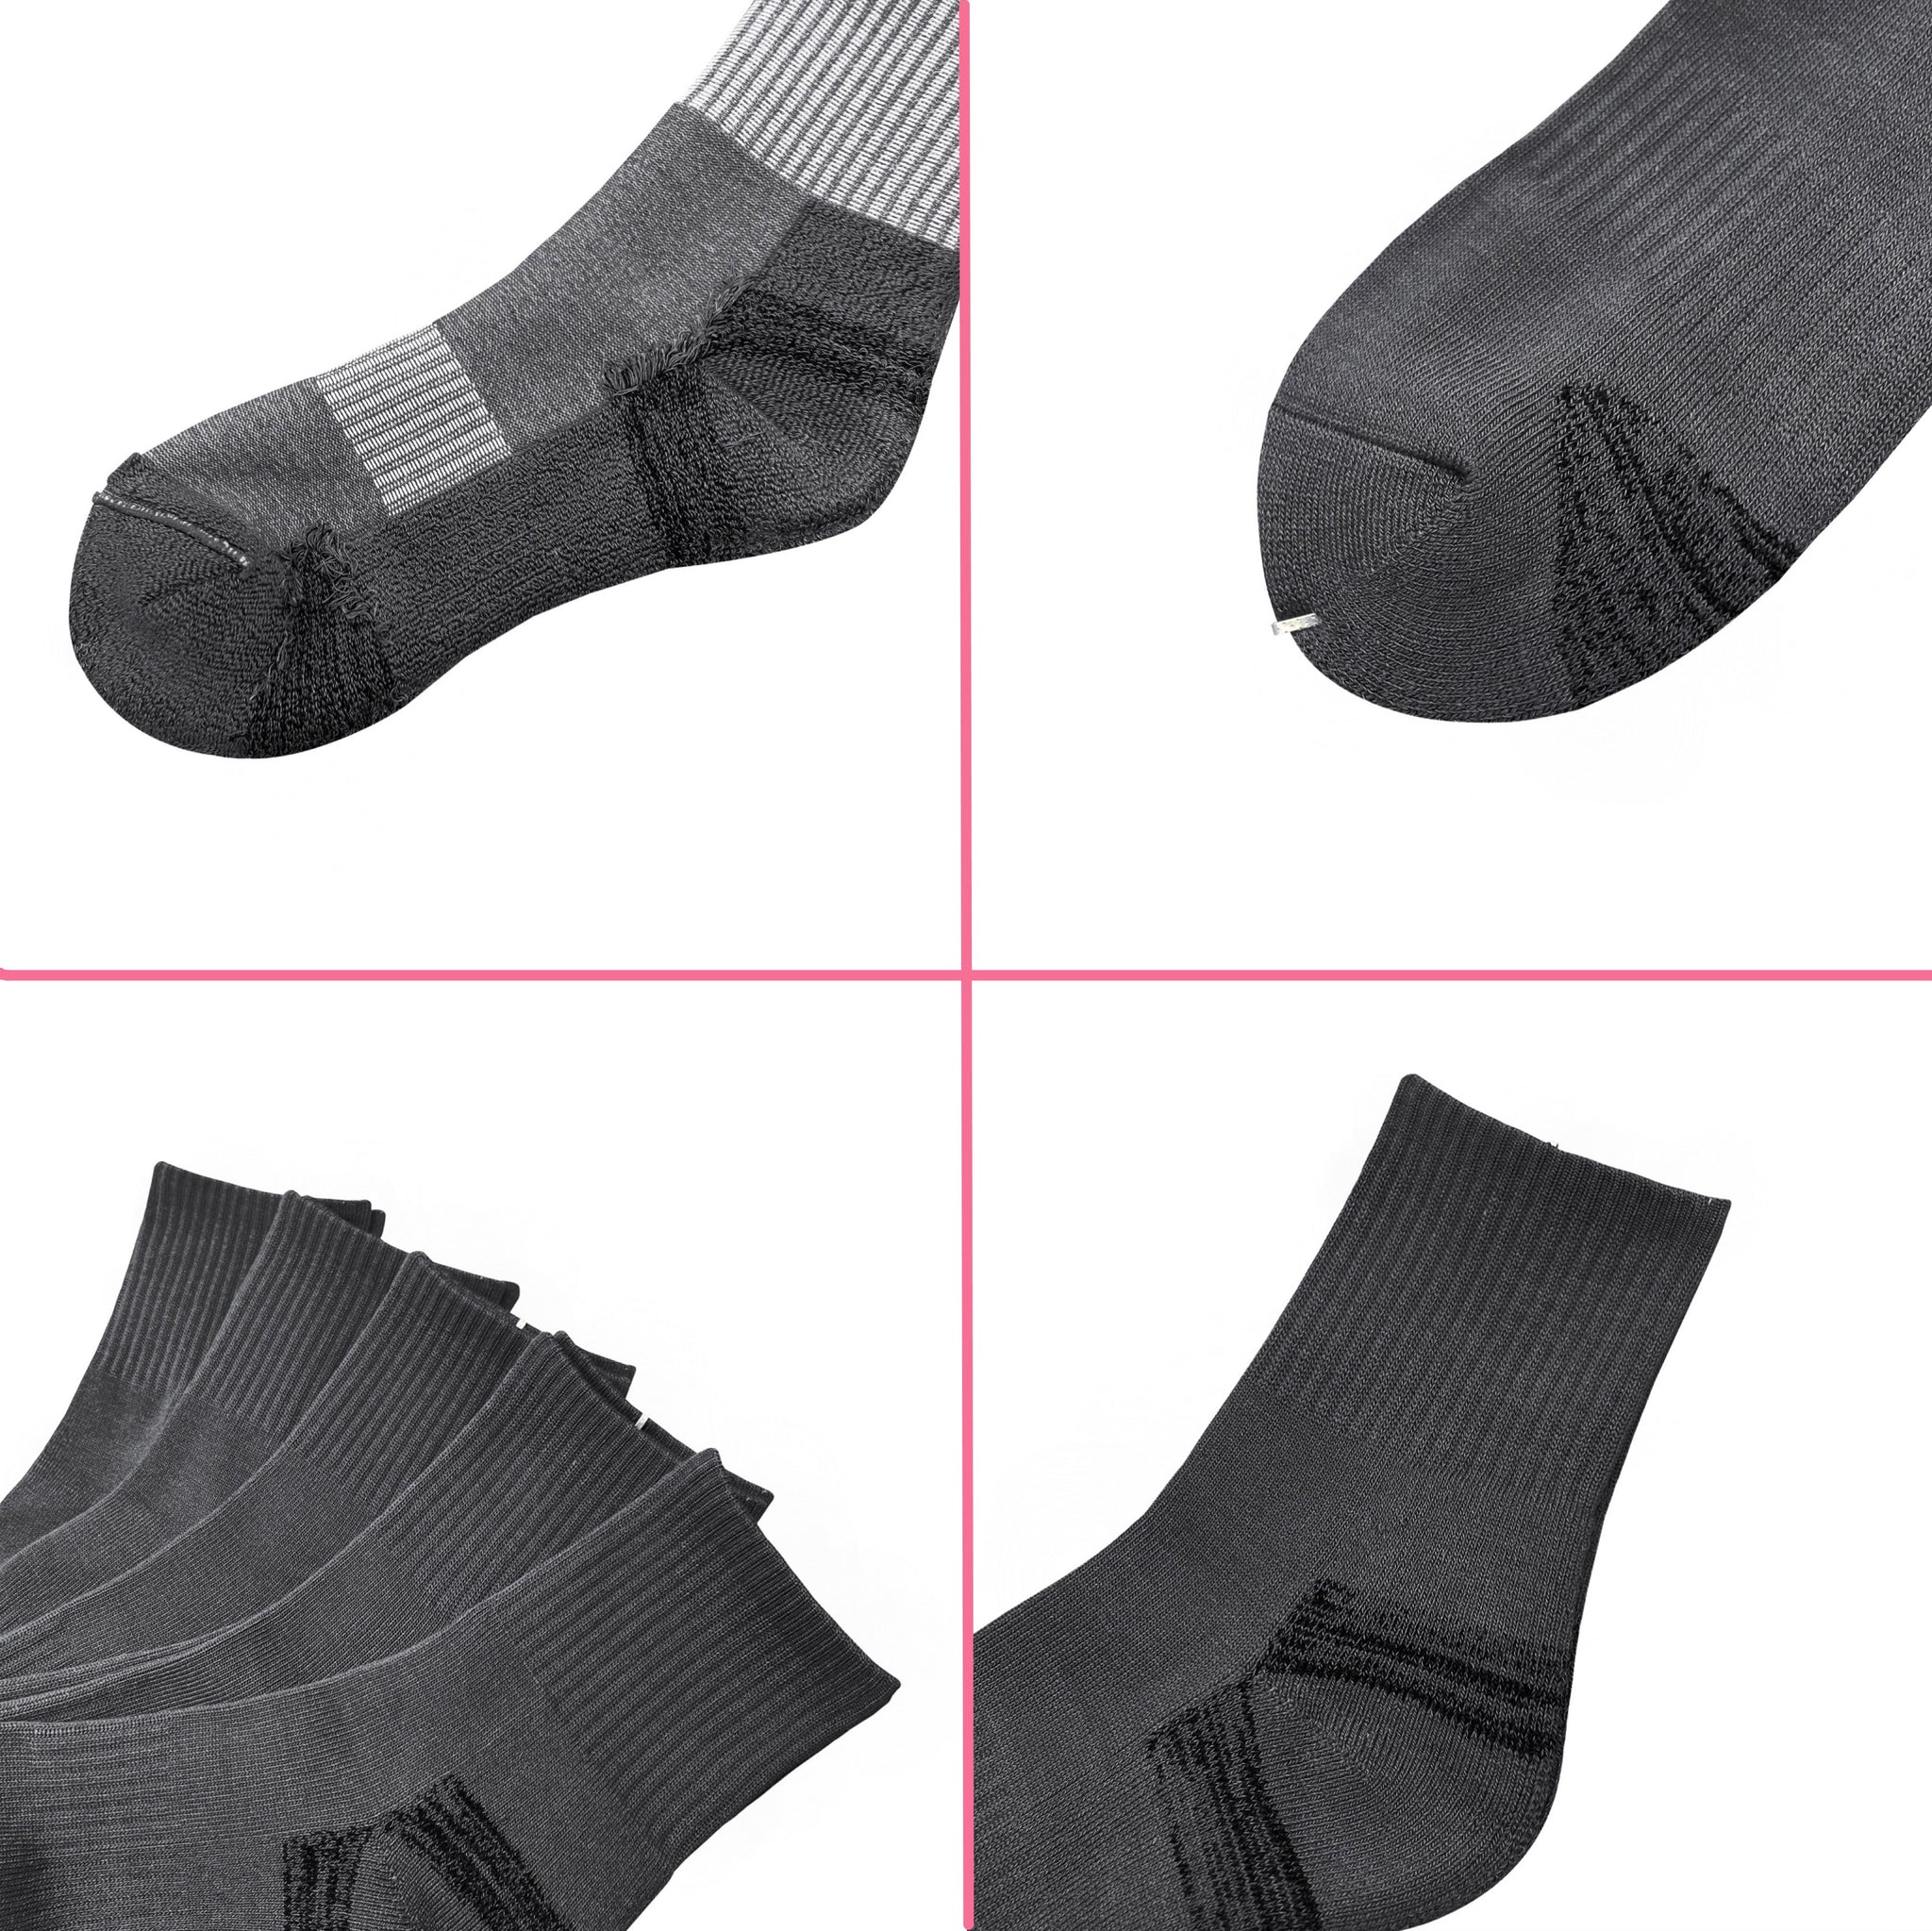 SERISIMPLE Bamboo Ankle Socks Men Ankle length athletic sock